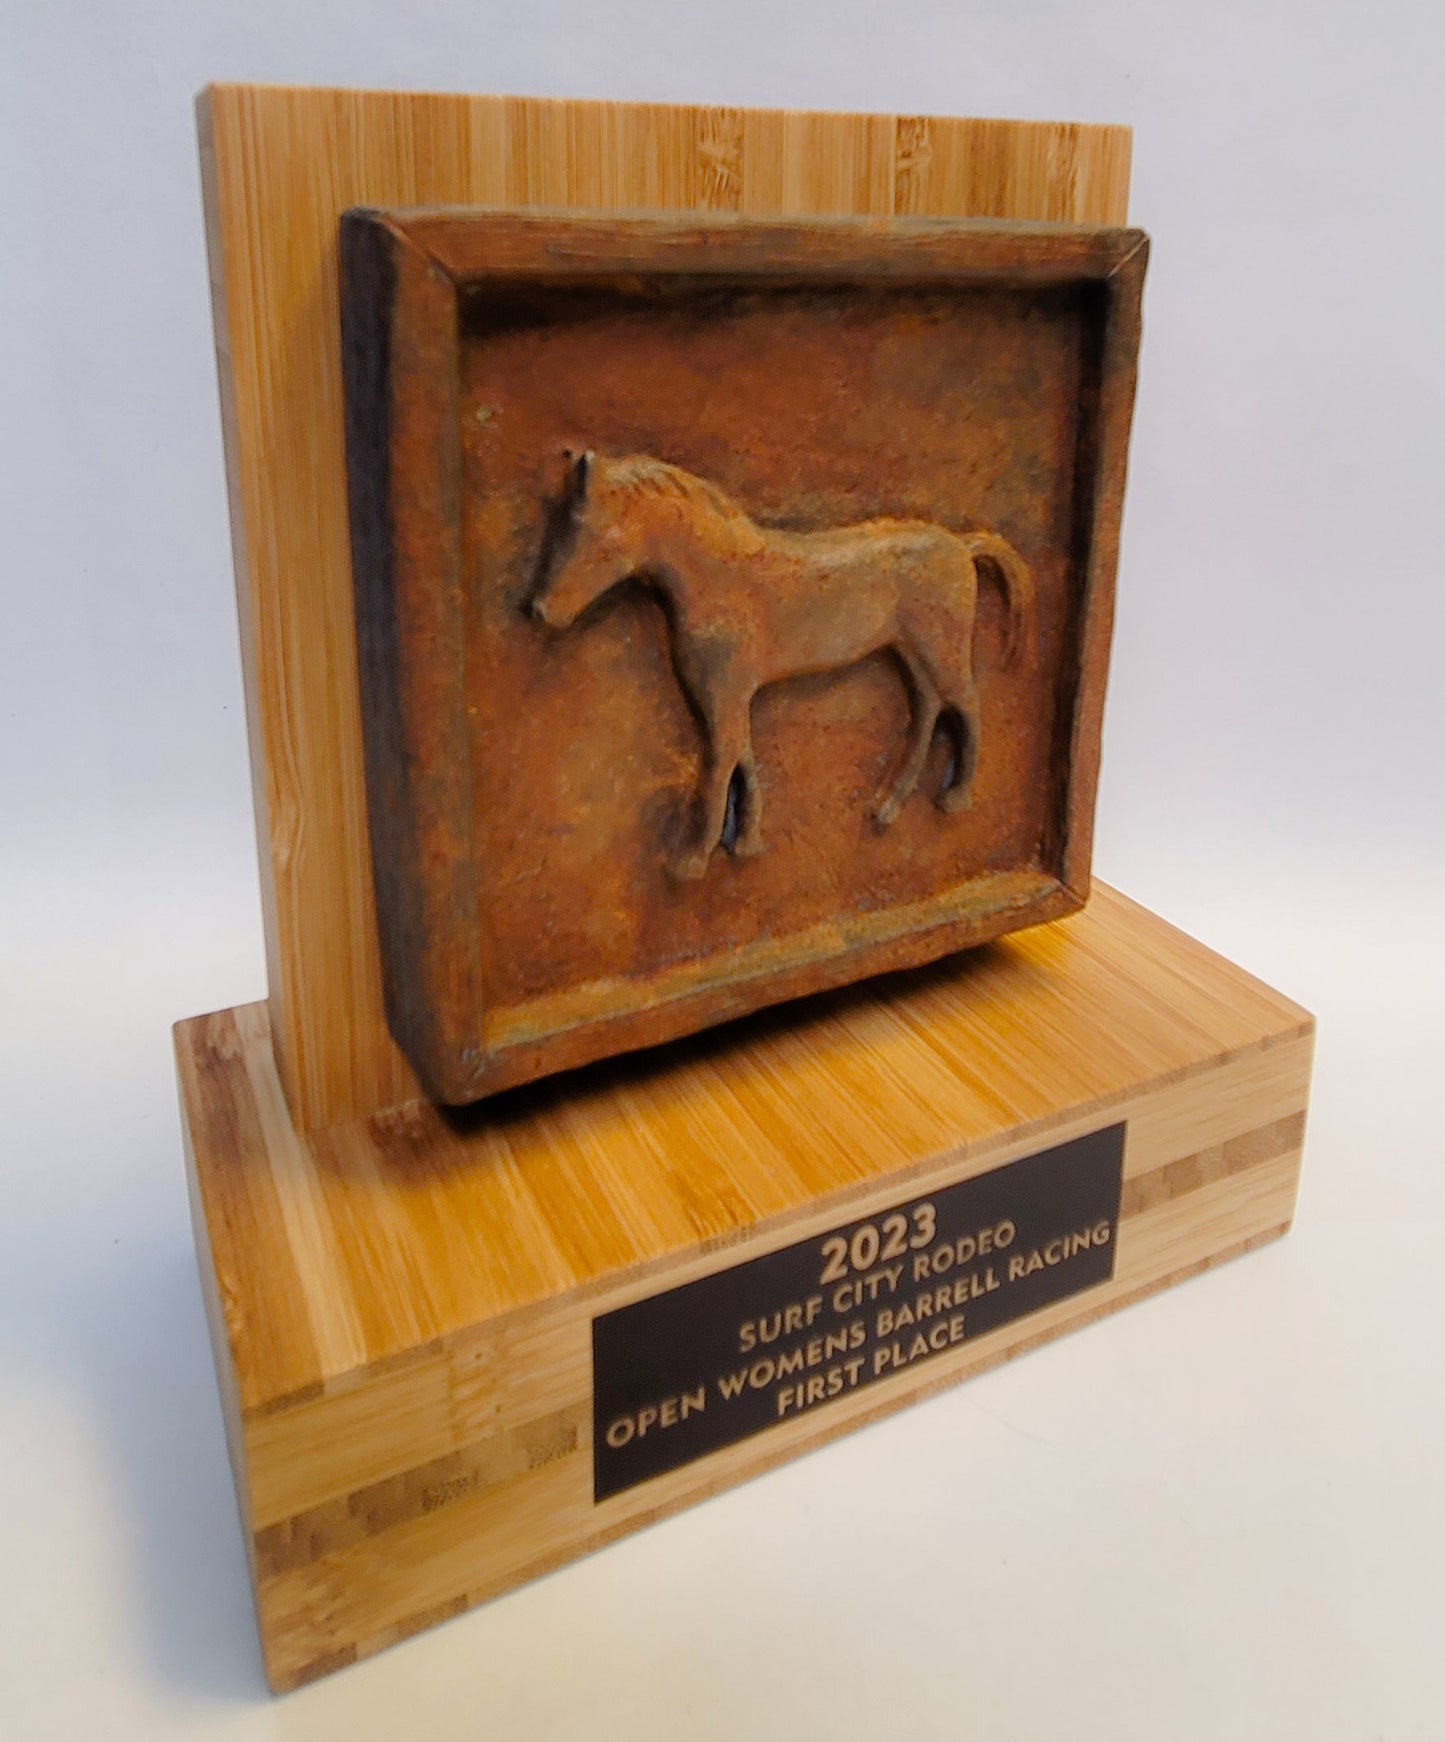 Korral King Equestrian Trophy Award by Dave C Reynolds